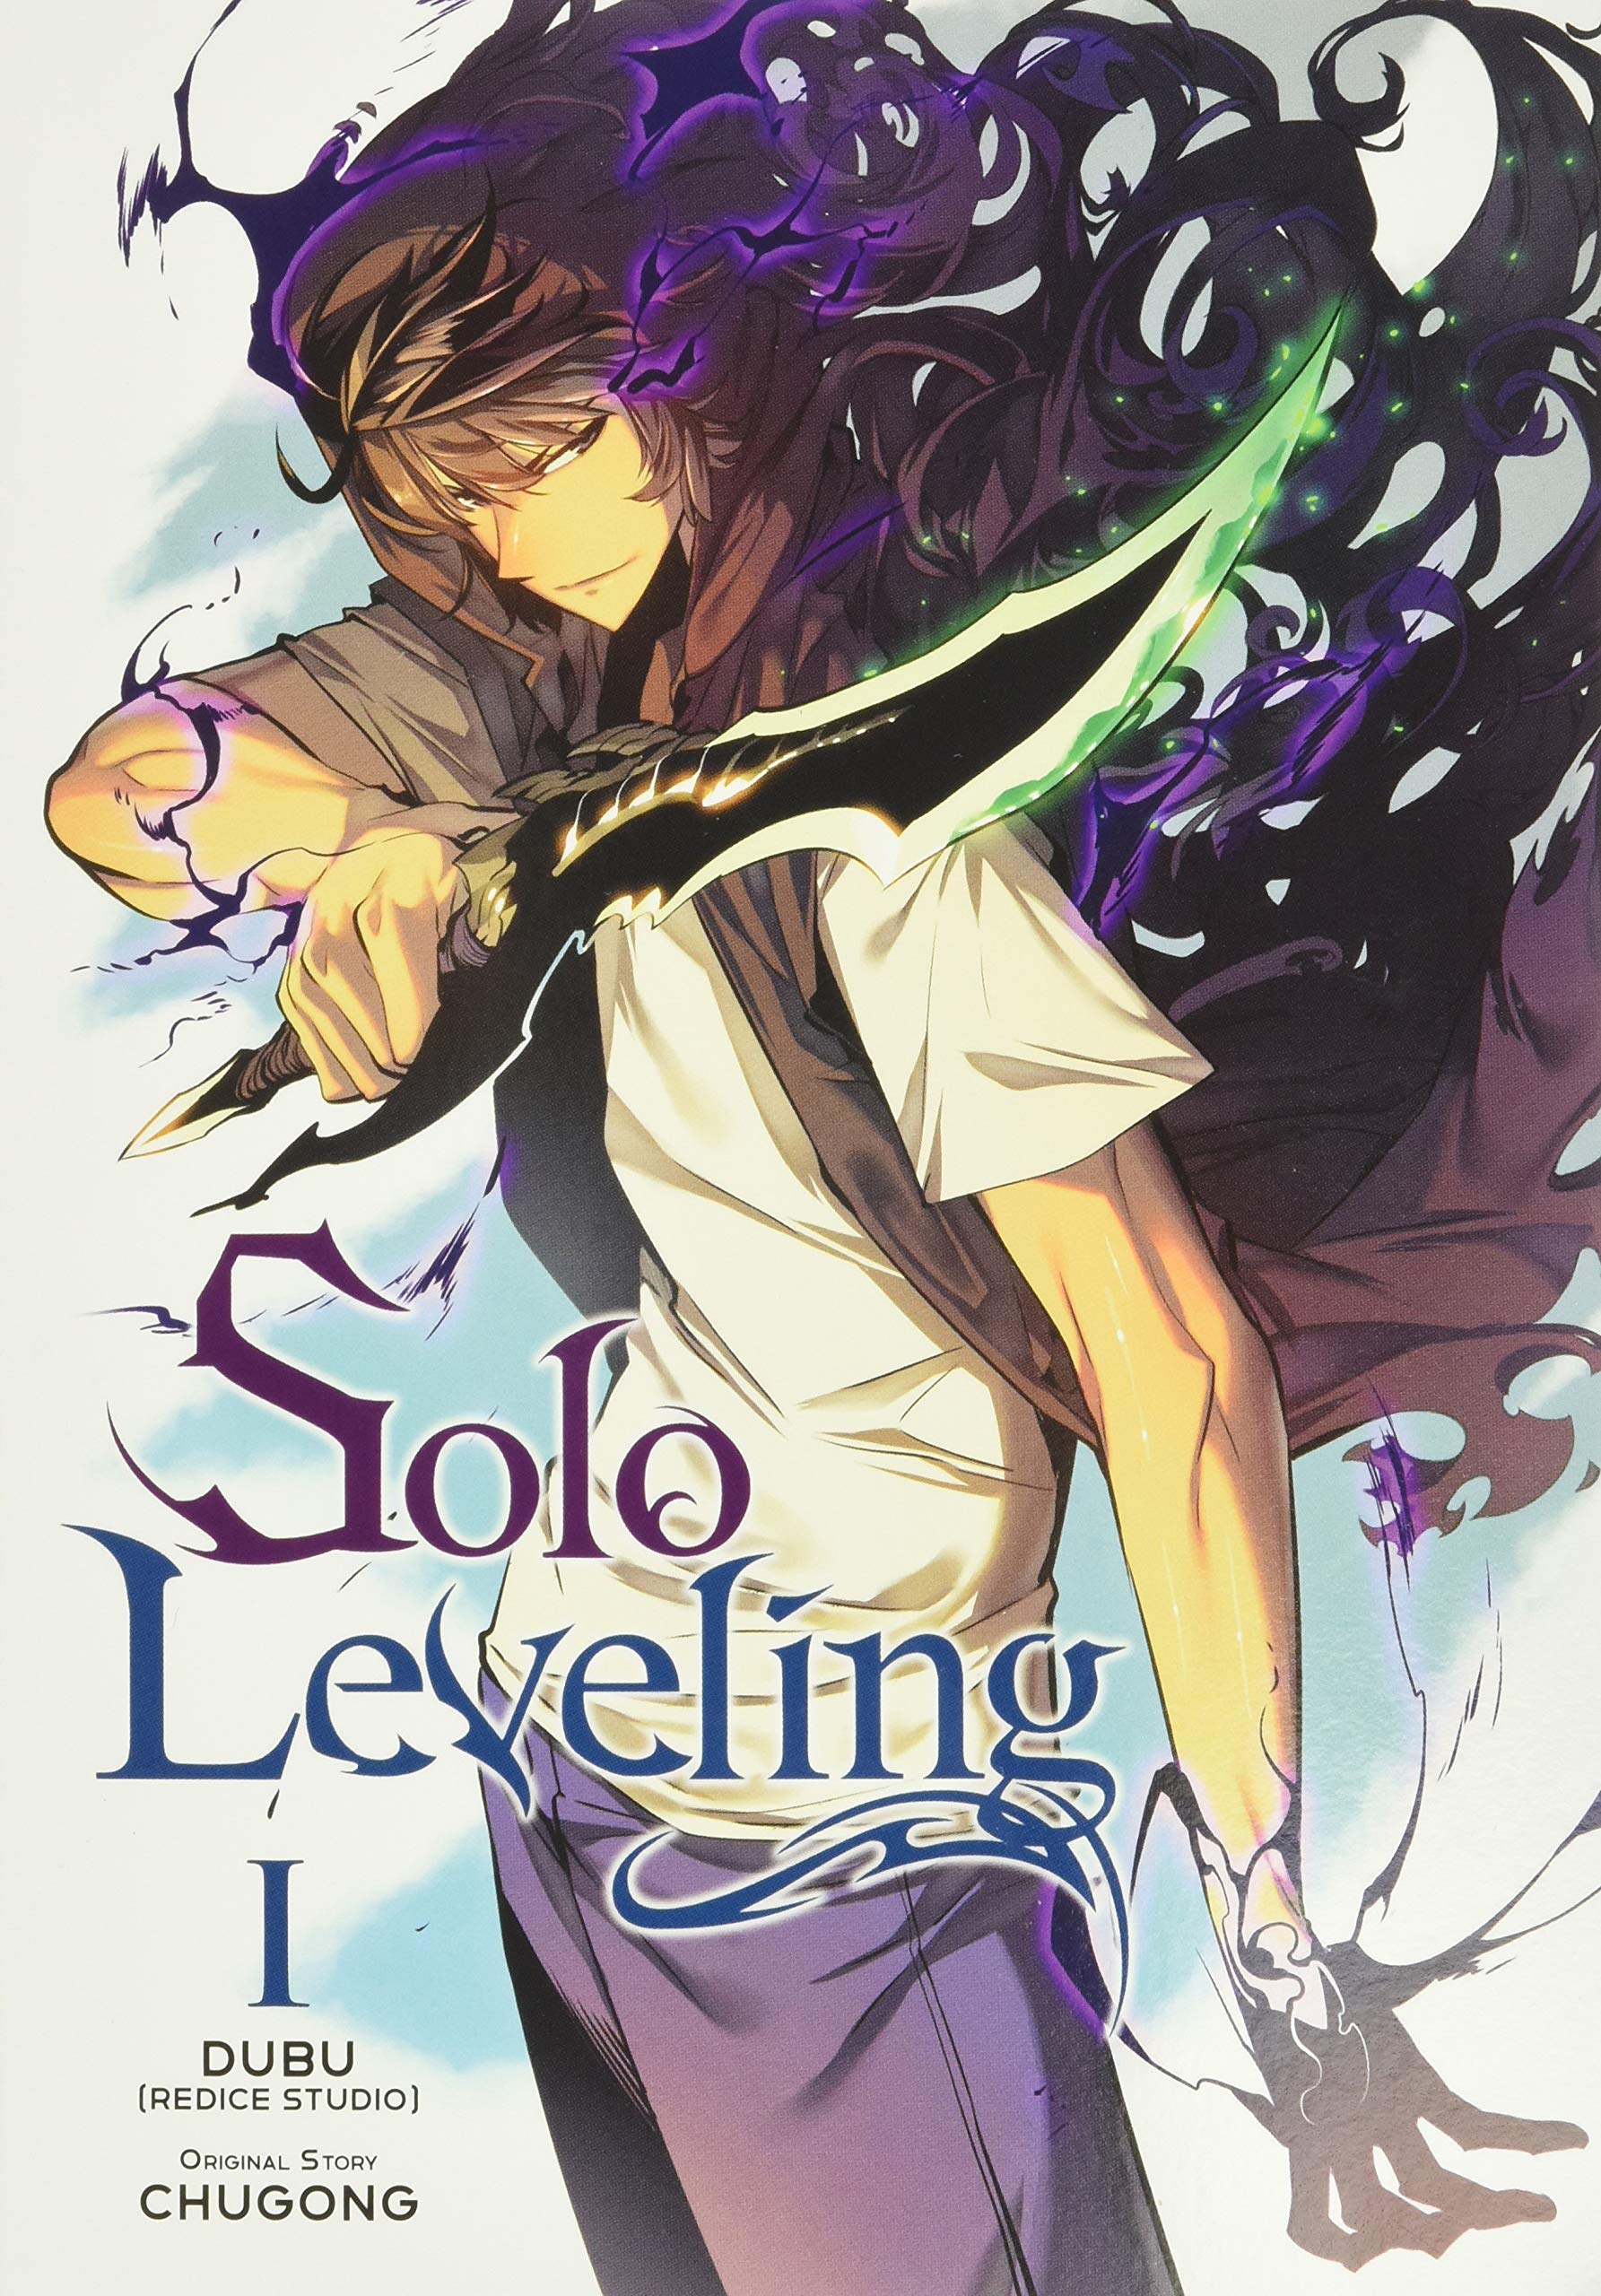 Solo Leveling, Vol. 1 (comic) (Solo Leveling (comic), 1): DUBU(REDICE STUDIO), Chugong: 9781975319434: Books